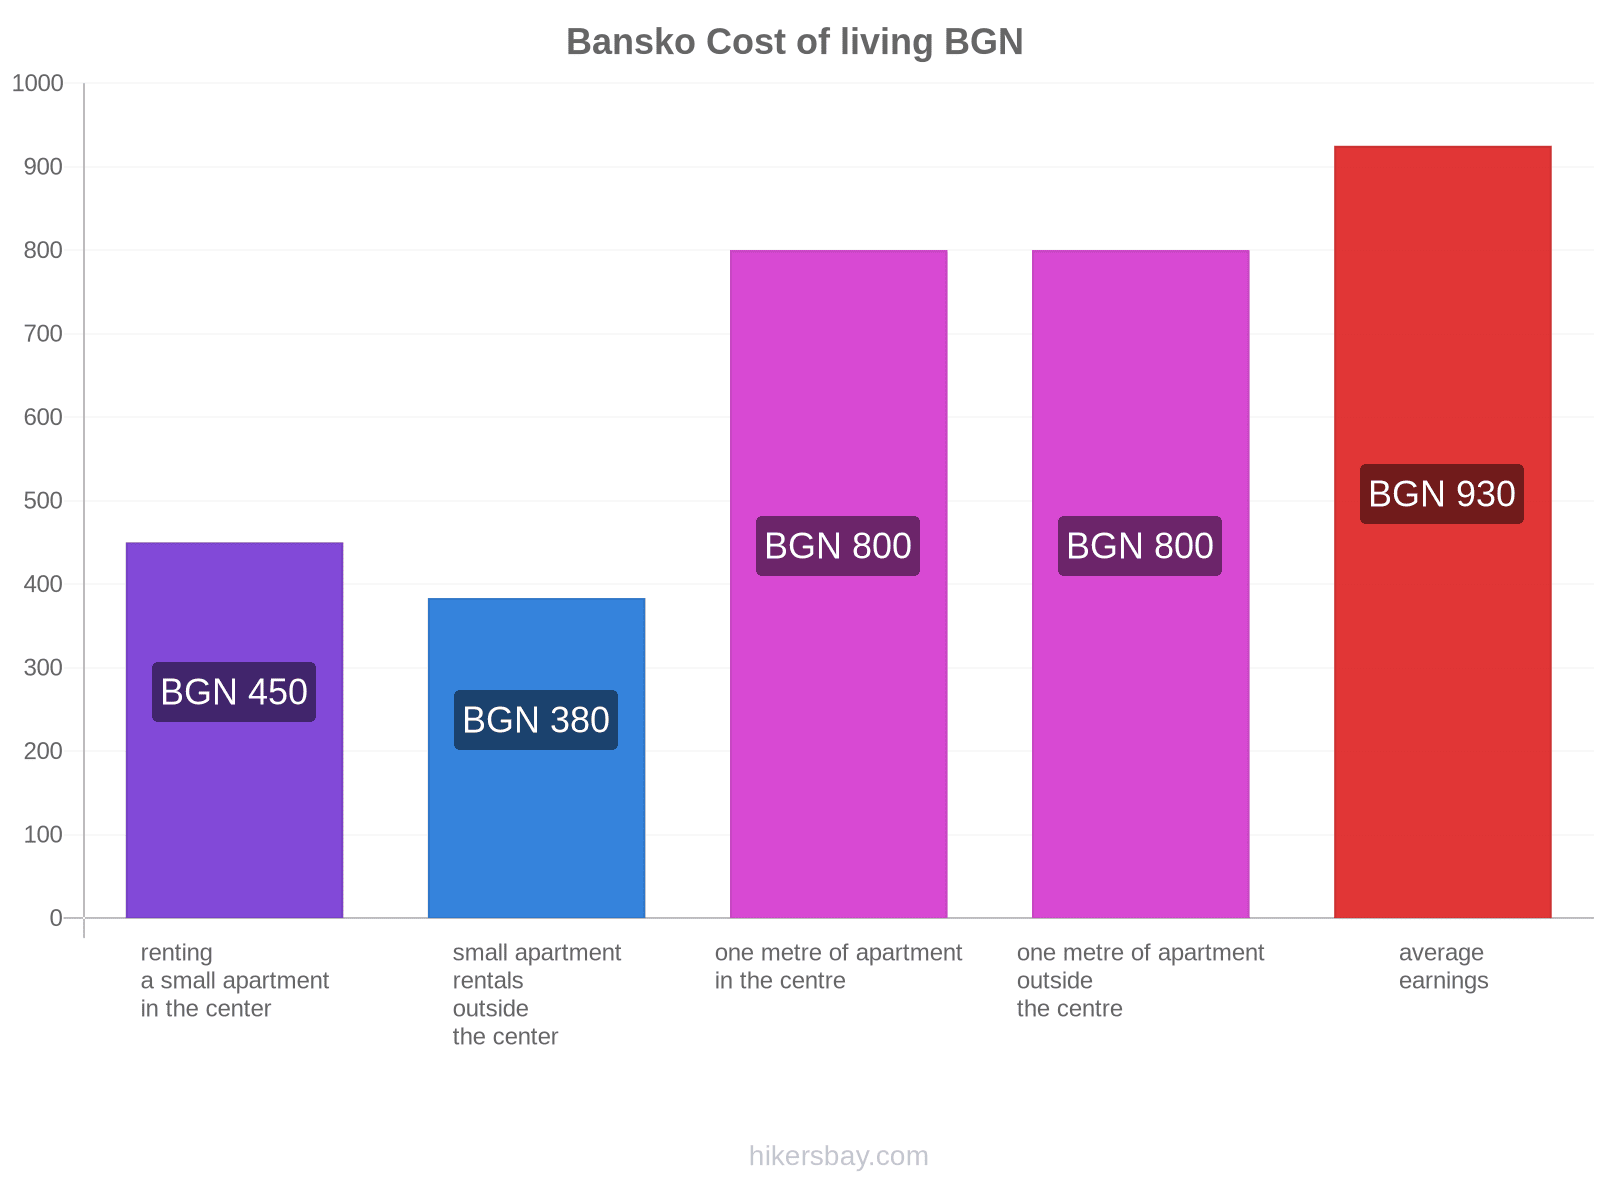 Bansko cost of living hikersbay.com